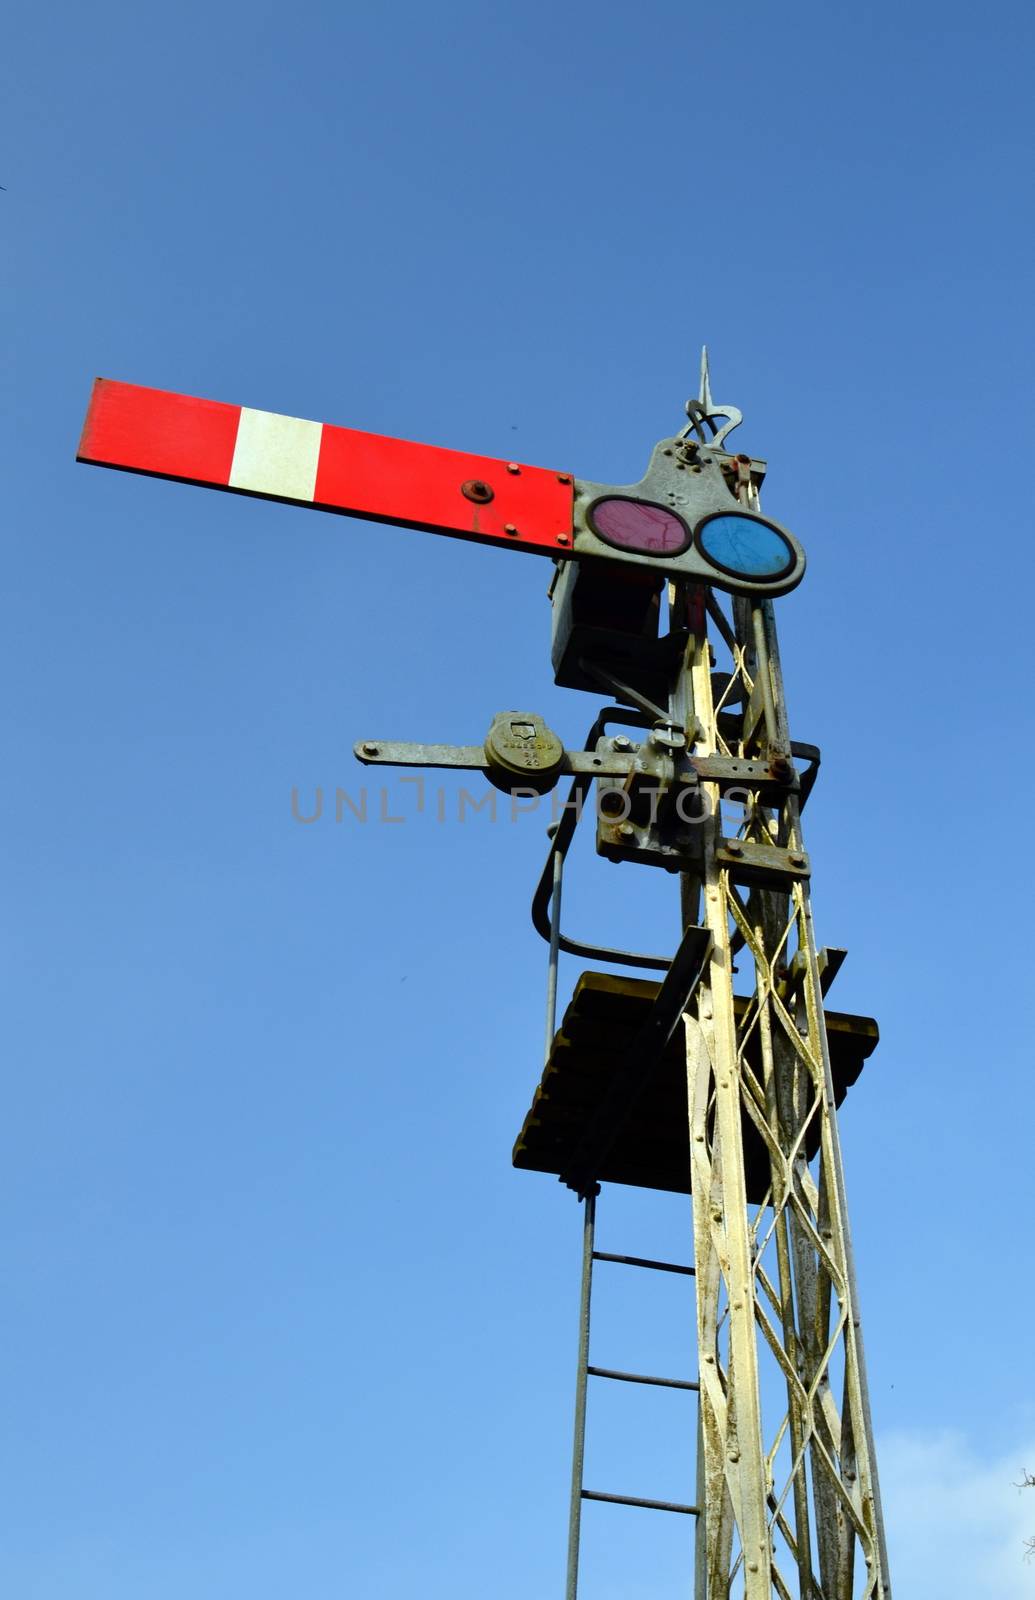 Rural British railway signal in stop position.